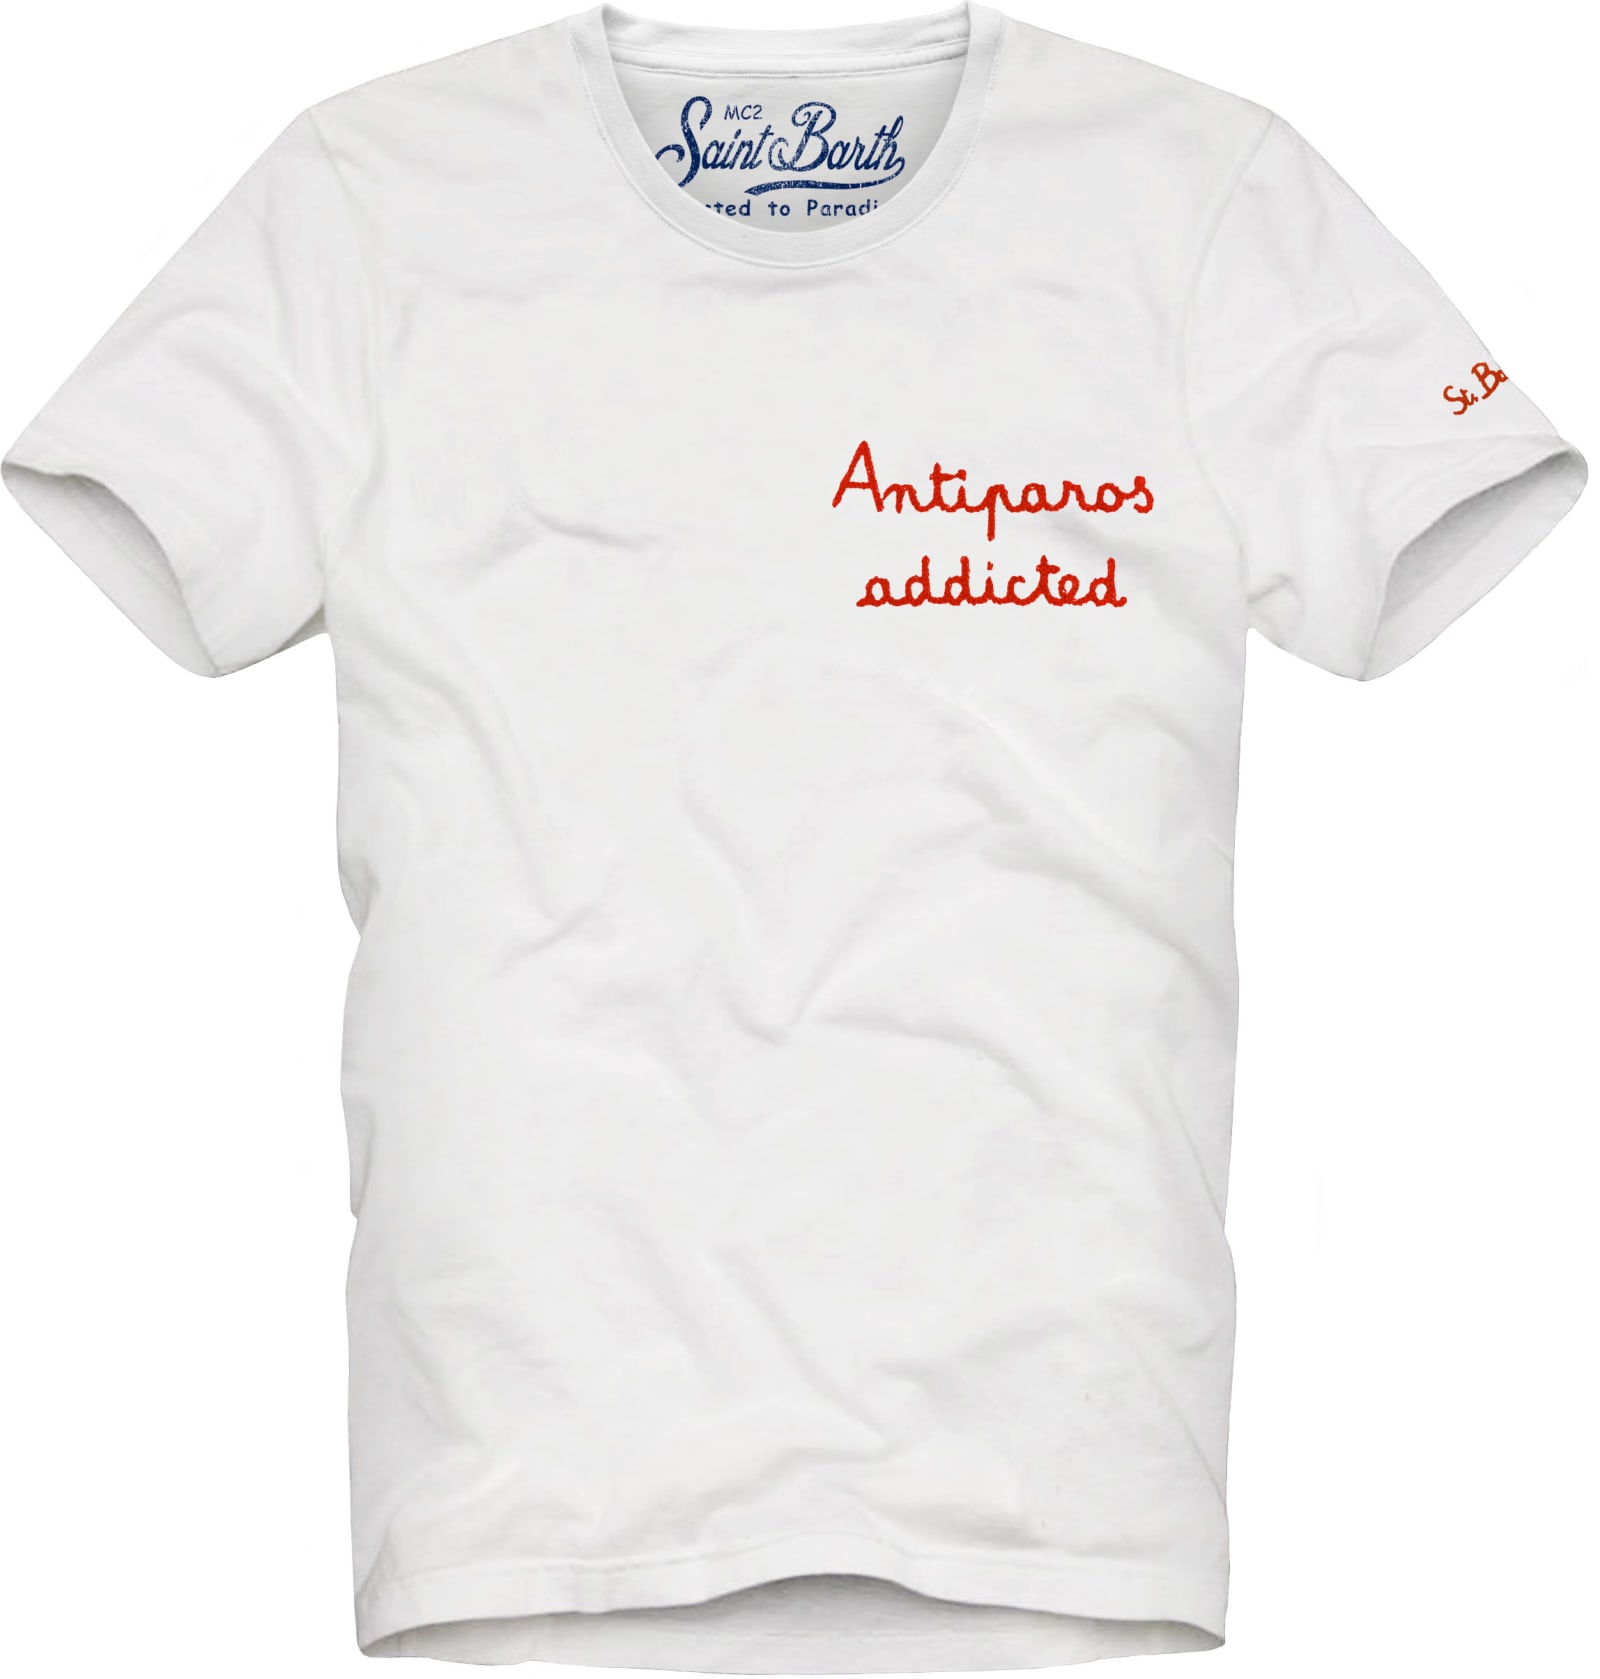 MC2 Saint Barth Embroidered T-shirt Antiparos Addicted